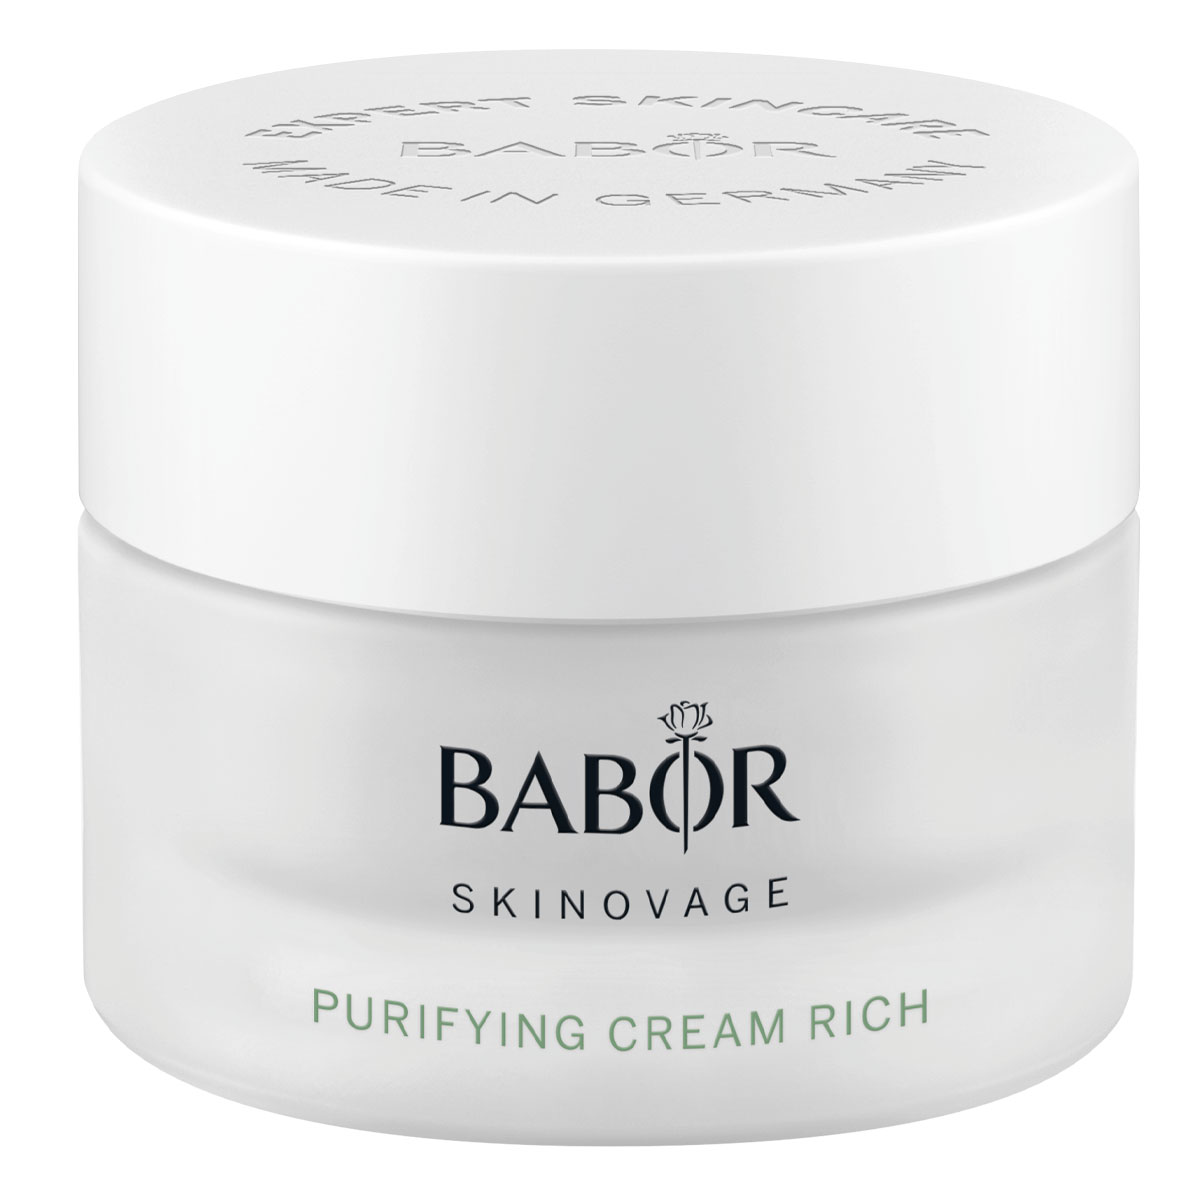 Крем Рич для Проблемной Кожи SKINOVAGE/Skinovage Purifying Cream Rich BABOR